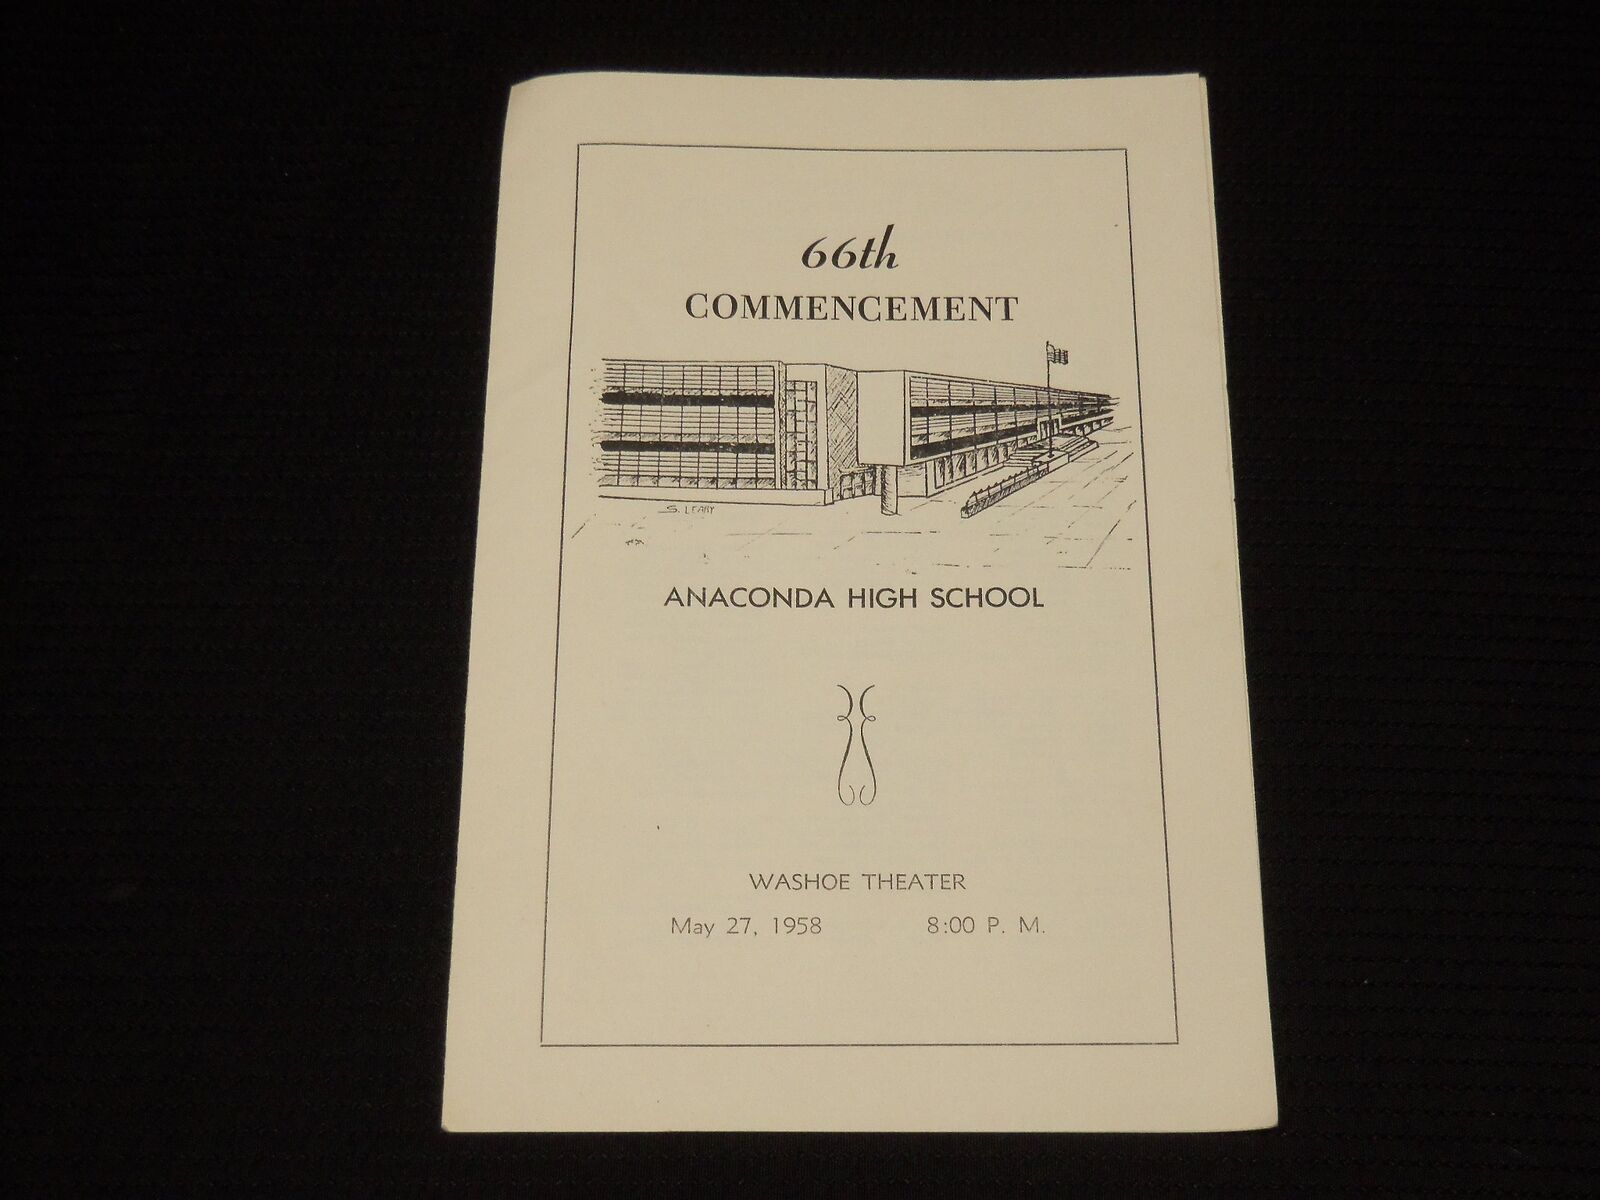 1958 MAY 27 ANACONDA HIGH SCHOOL COMMENCEMENT PROGRAM - WASHOE THEATER - K 637